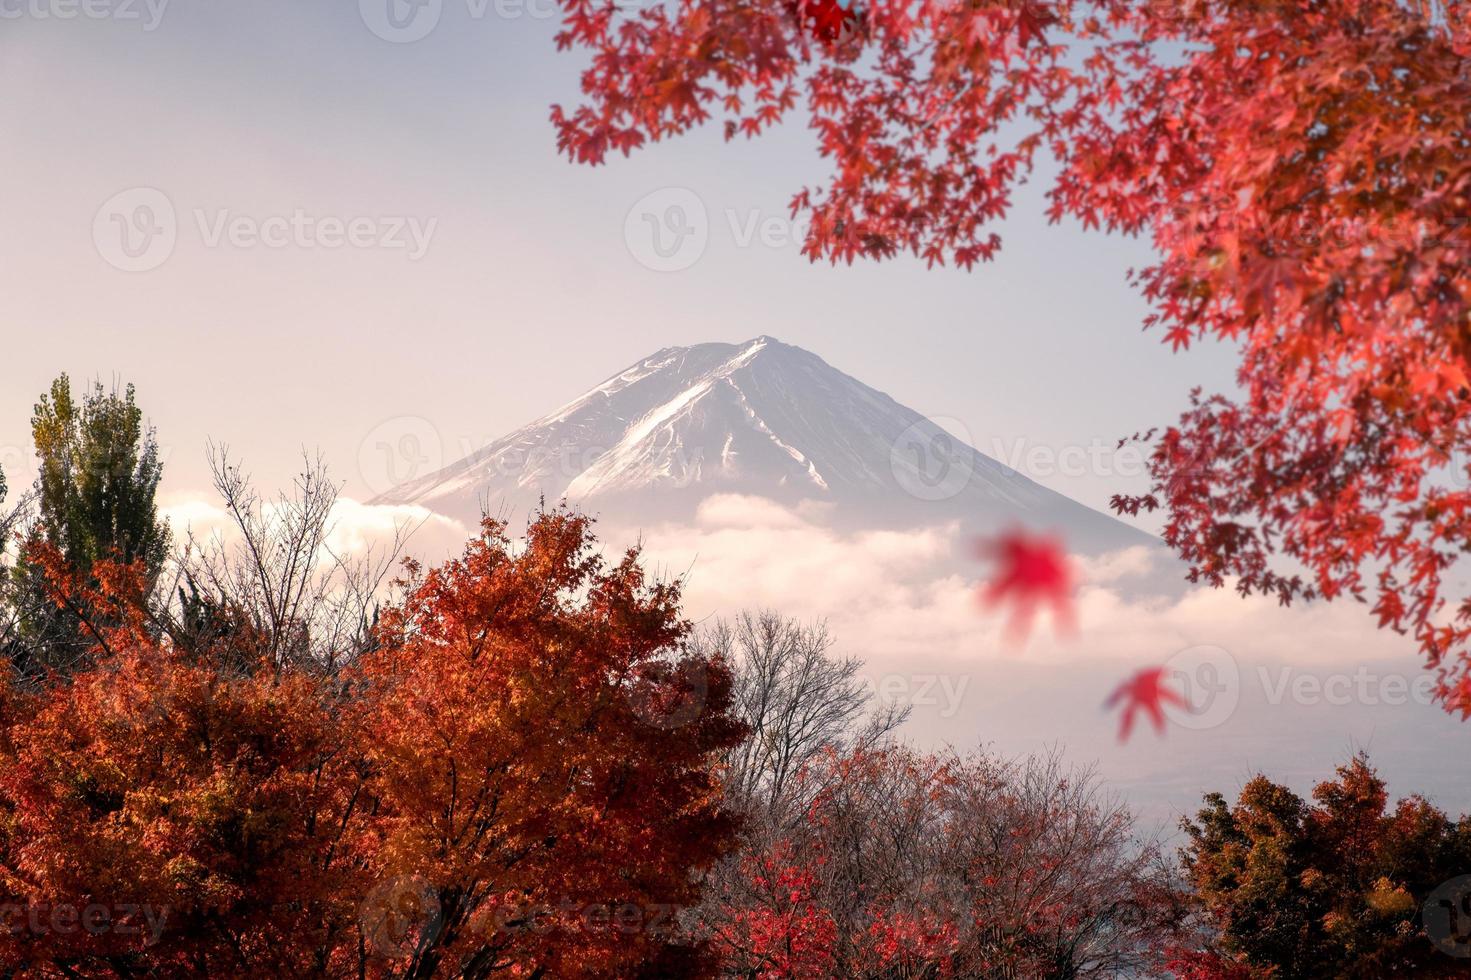 montagna fuji-san in foglie rosse d'acero in autunno foto